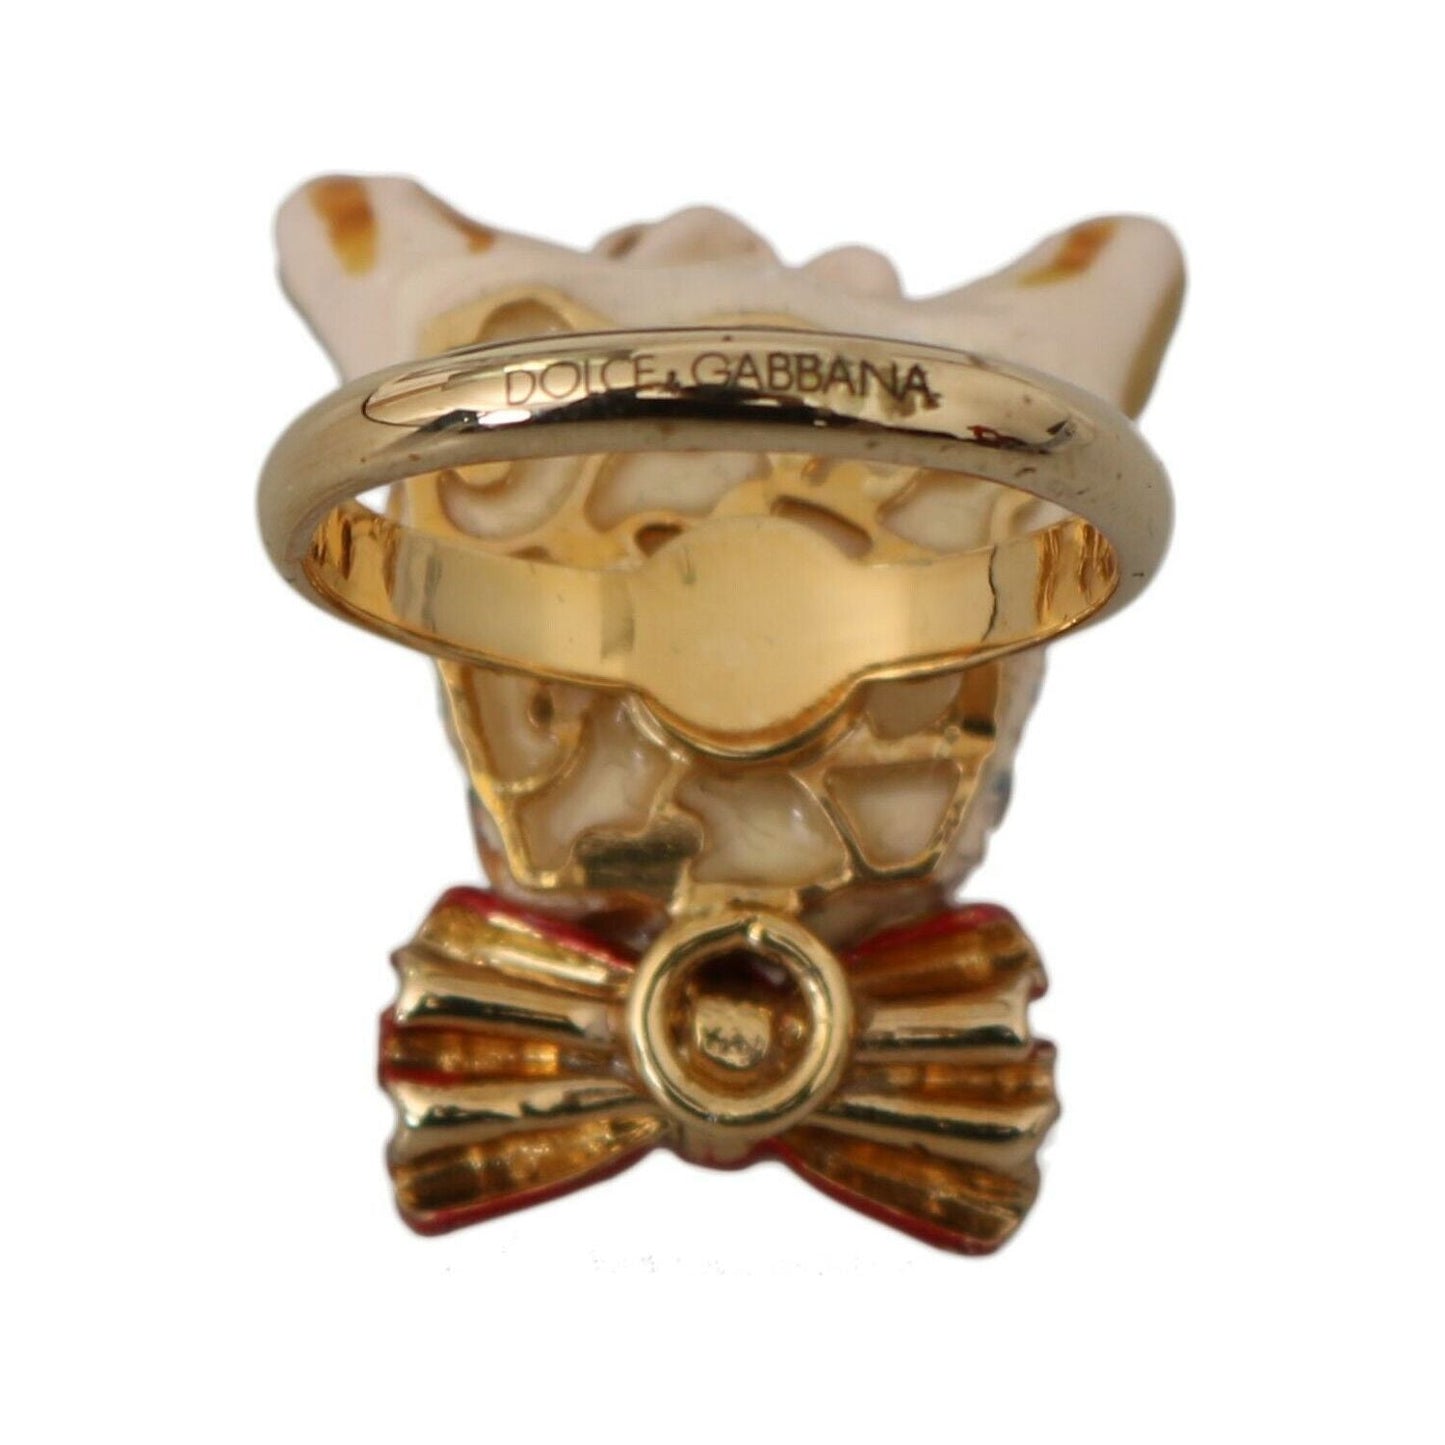 Dolce & Gabbana Elegant Canine-Inspired Gold Tone Ring Ring beige-dog-pet-branded-accessory-gold-brass-resin-ring